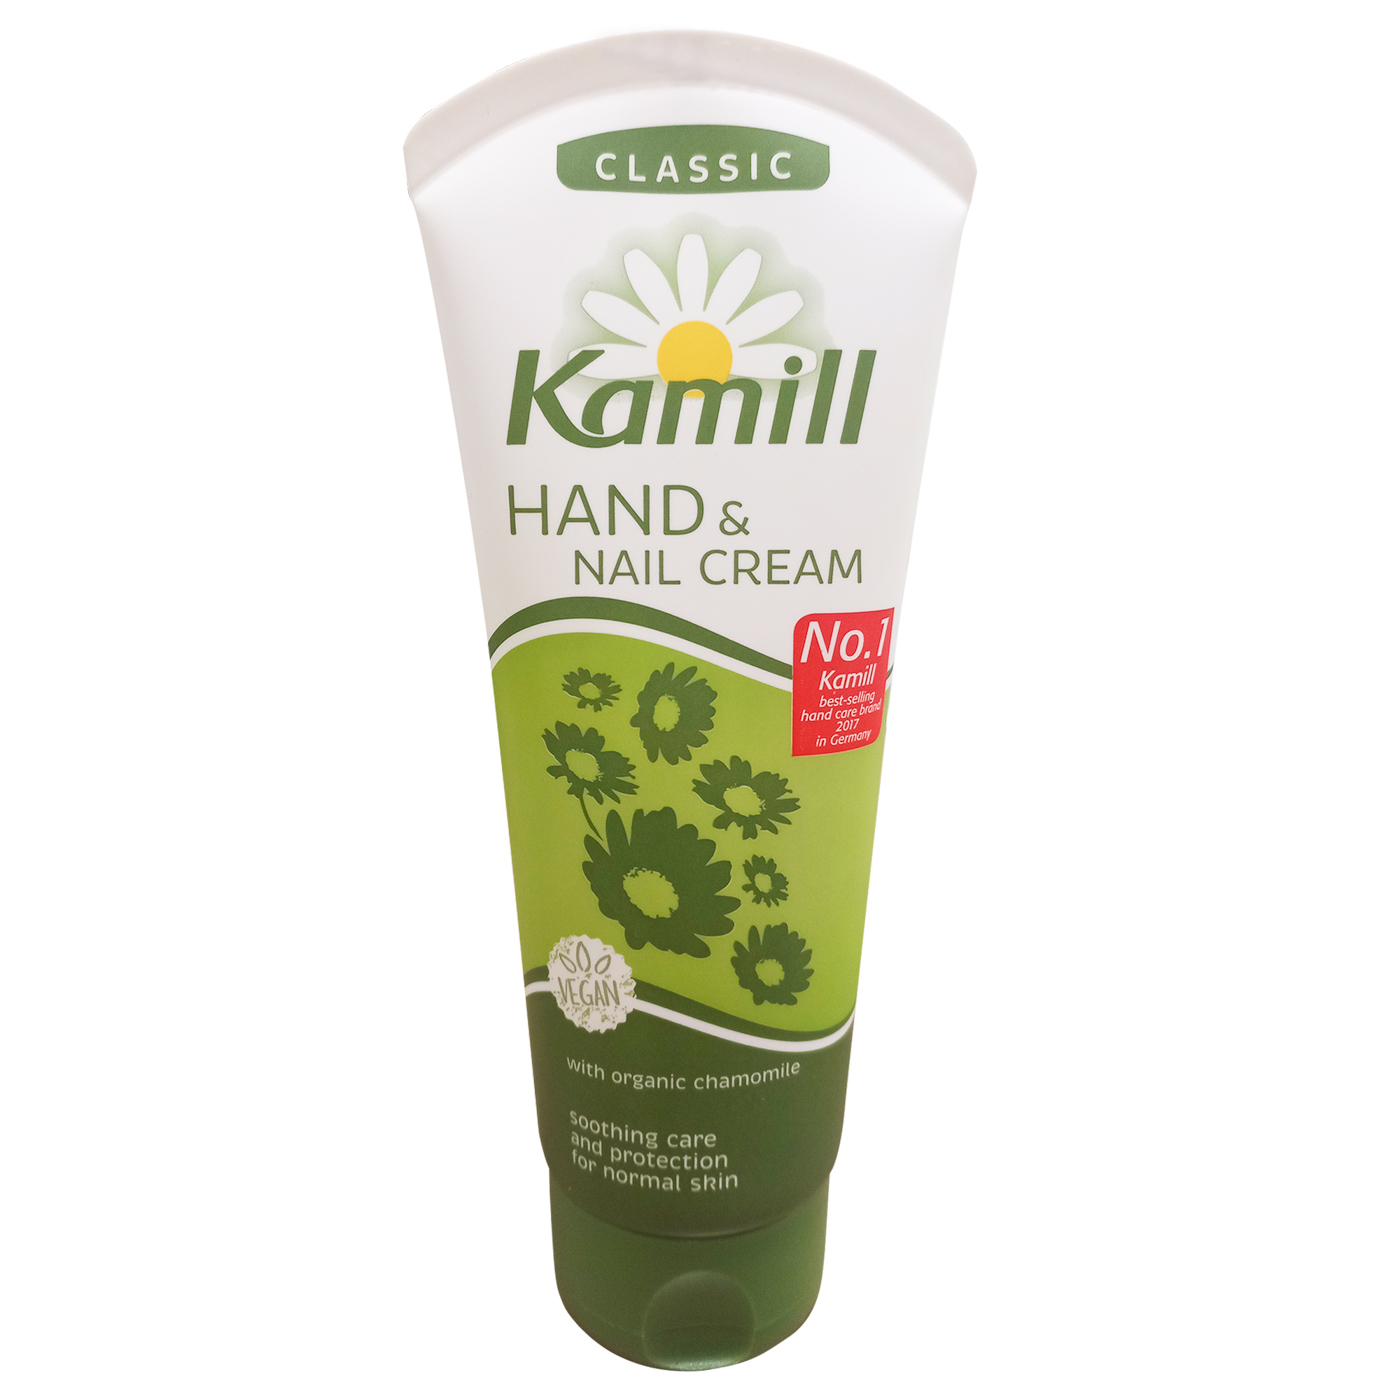 Kamill Hand & Nagel Creme classic 100ML